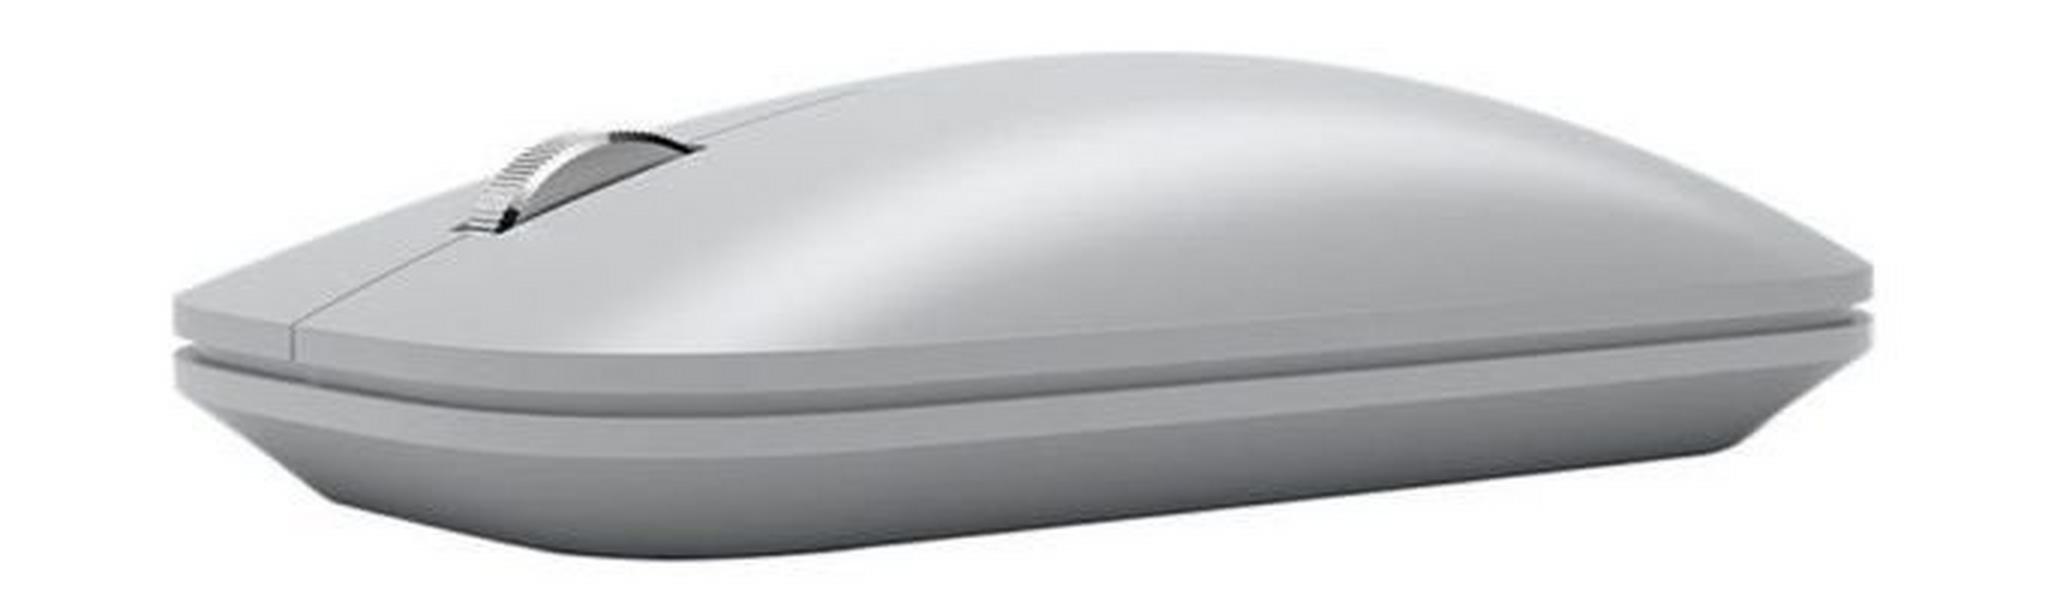 Microsoft Surface Mobile Mouse (KGY-00008) - Platinum